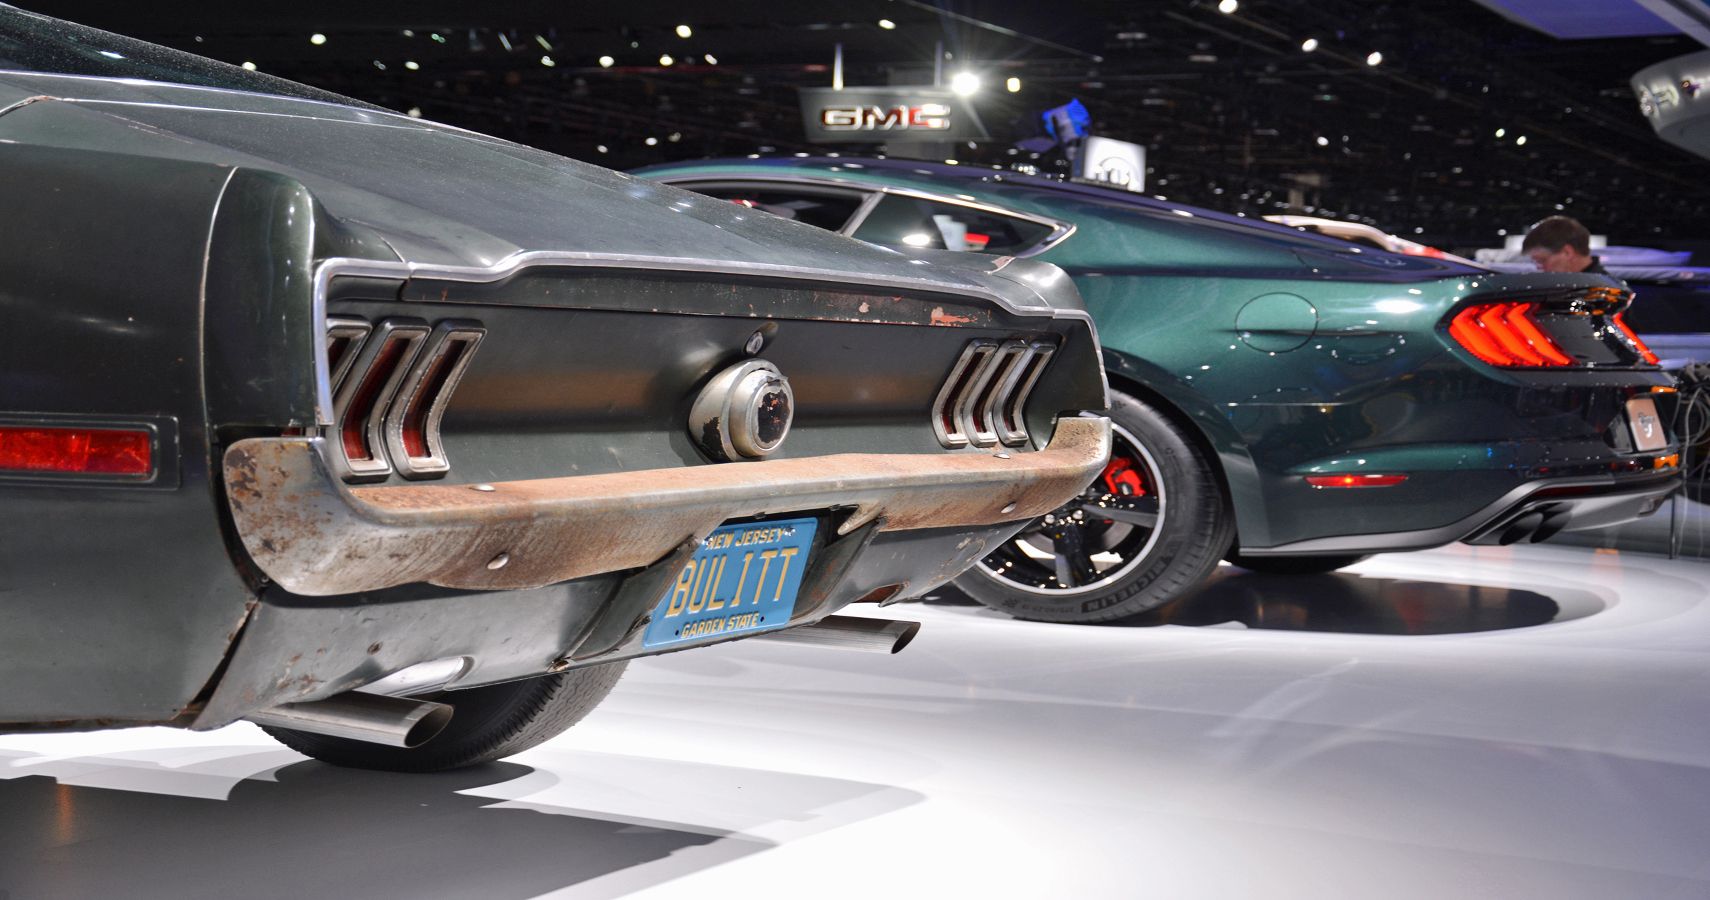 The mechanically restored Hero Bullitt Mustang appeared at the debut of the 2018 Bullitt Edition